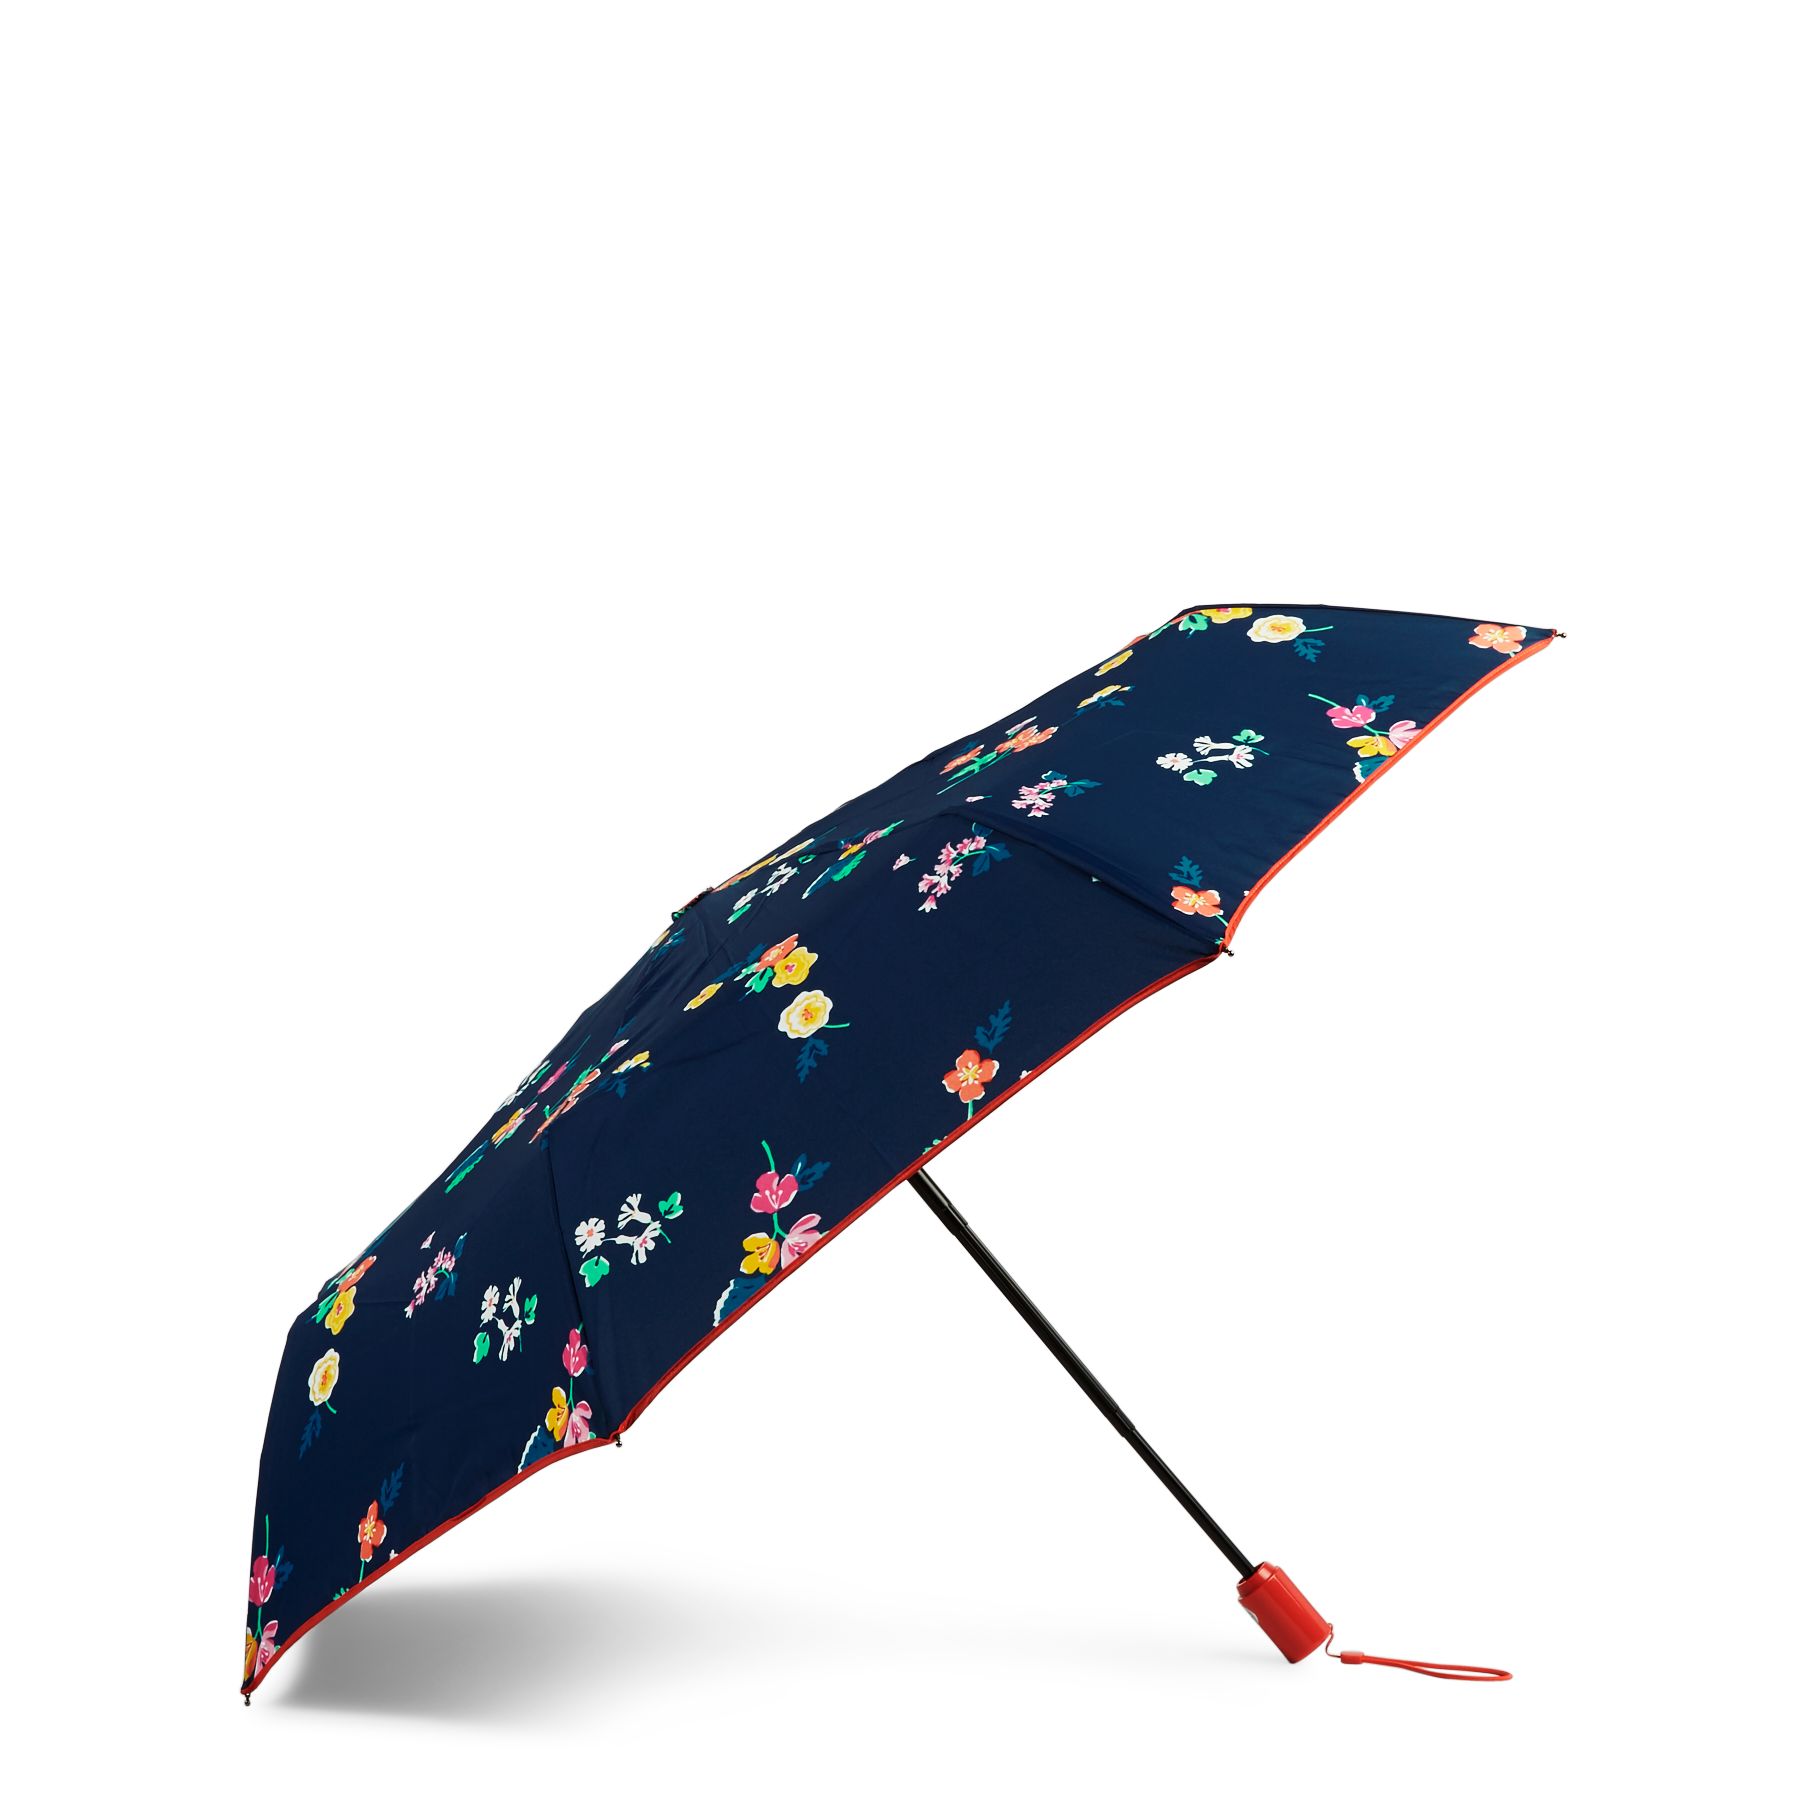 Vera Bradley Umbrella in Santiago FloralOther Fashion Accessories